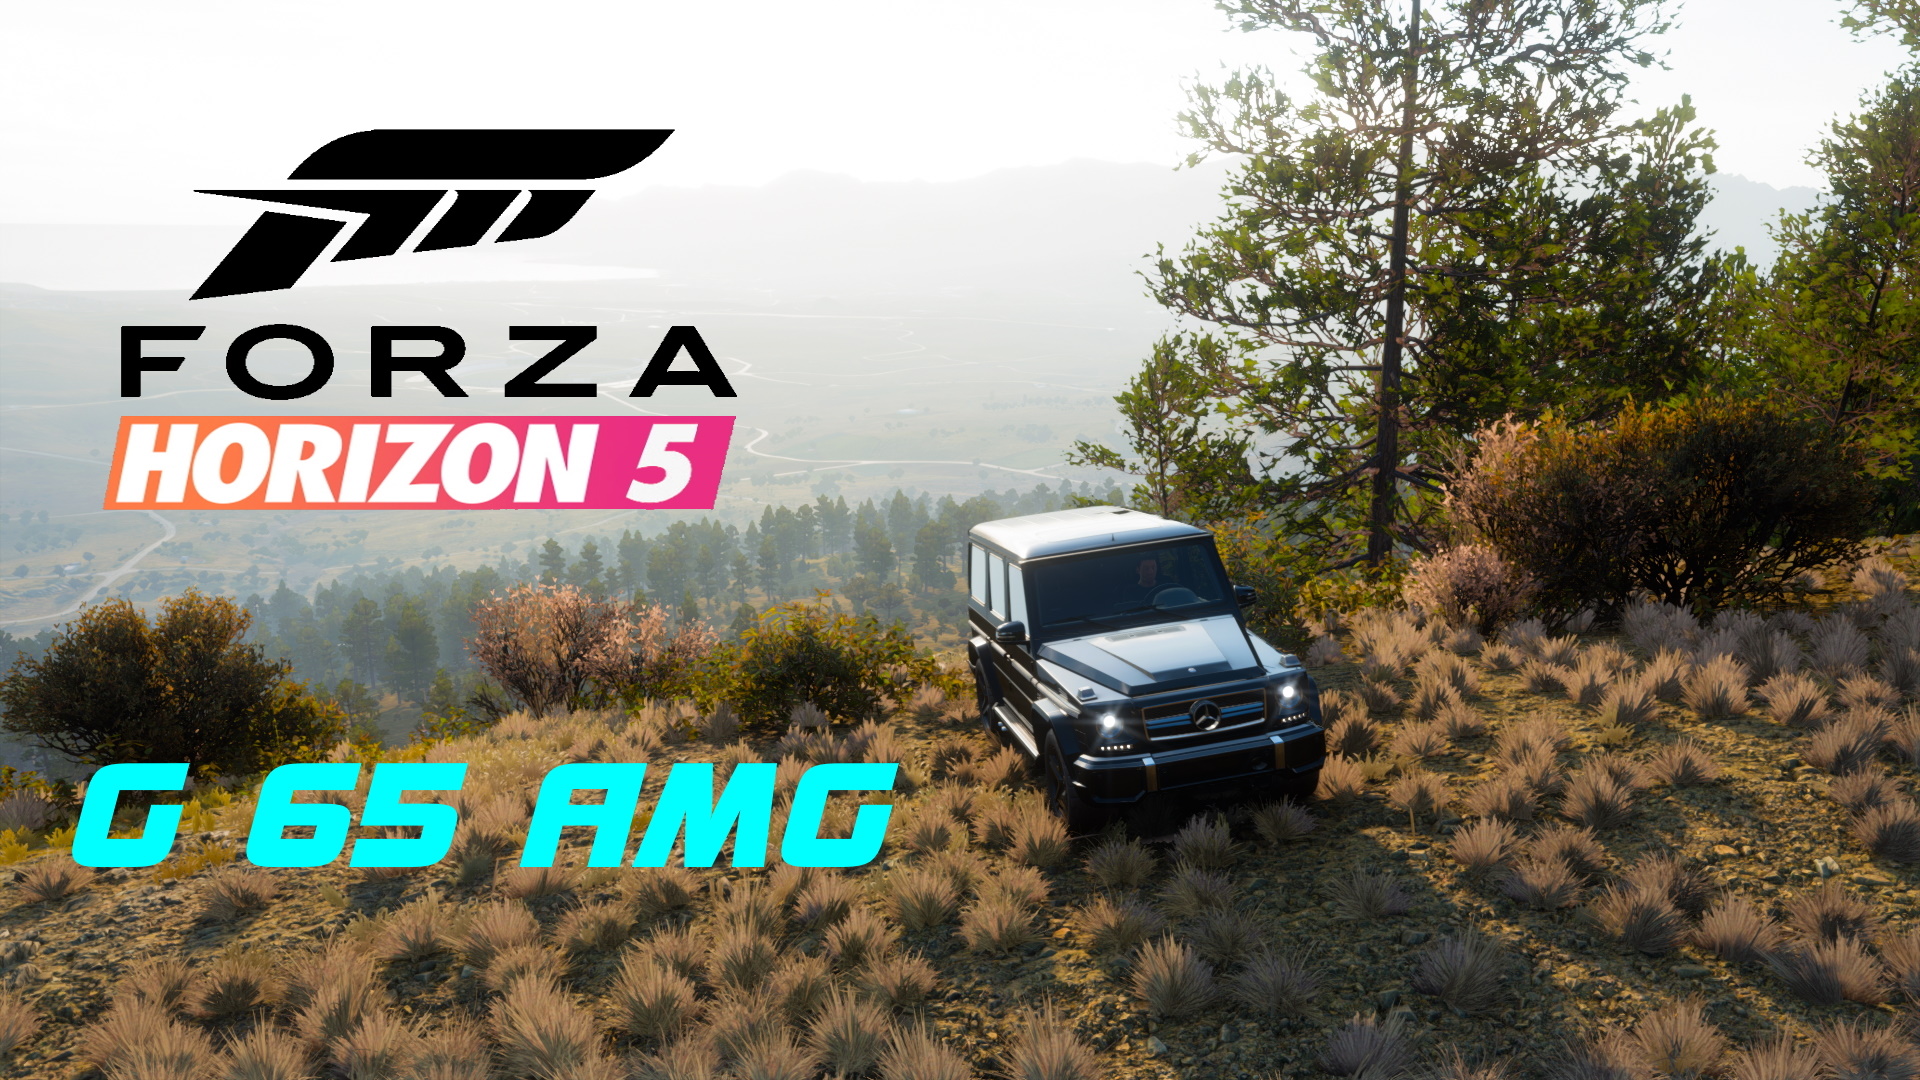 OFF ROAD Mercedes-Benz G65 AMG Forza Horizon 5 Gamepad Defender X7